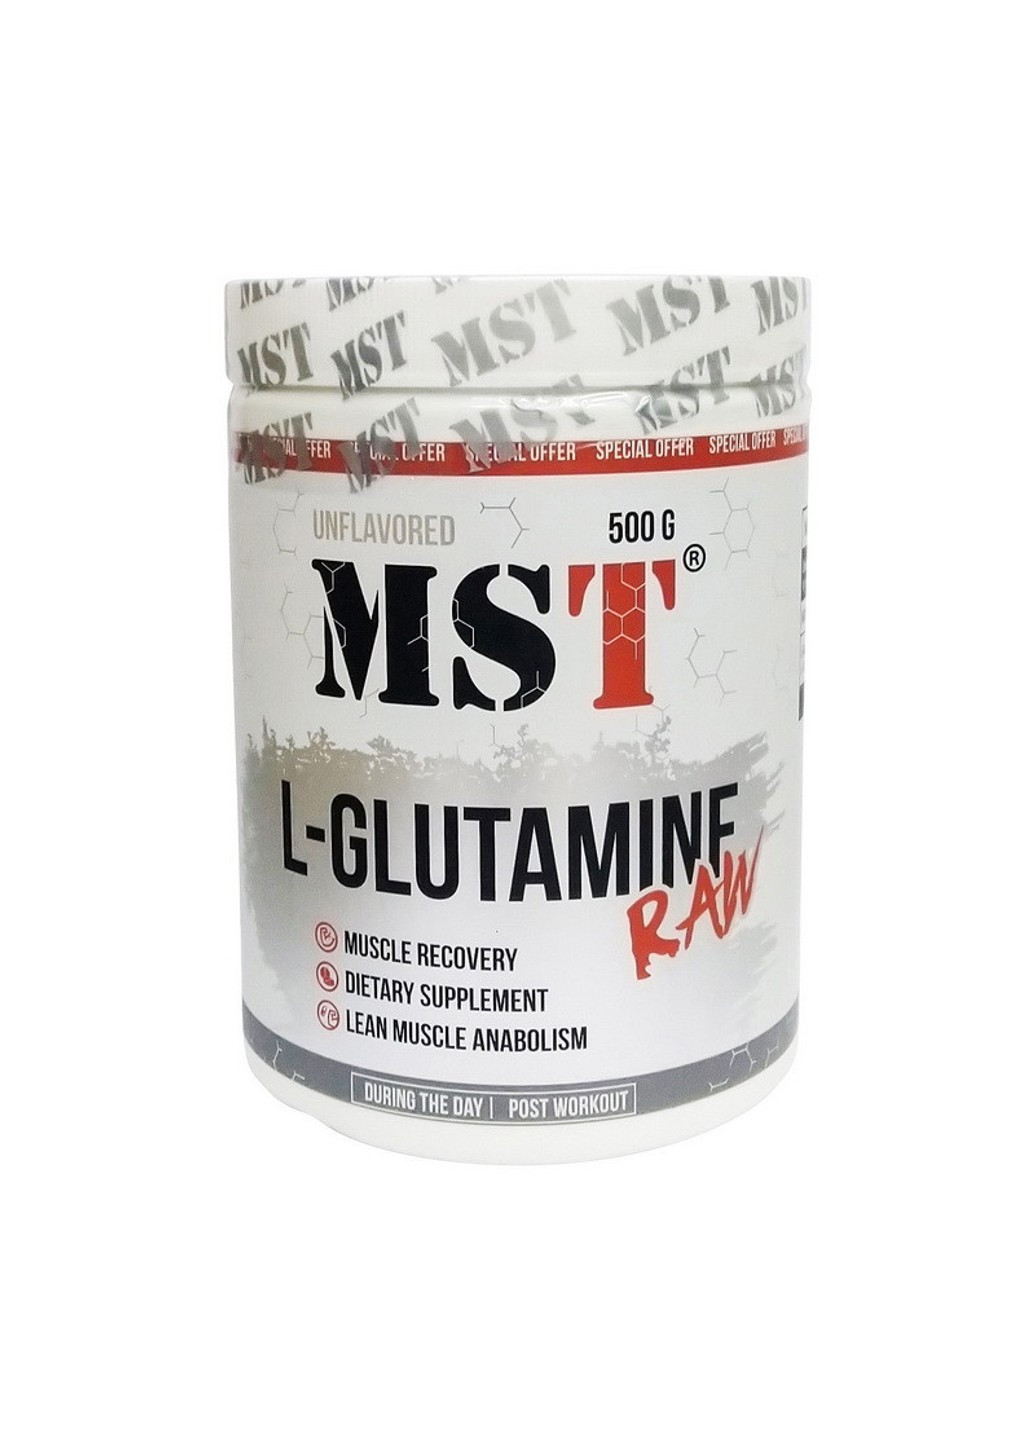 Глютамин L-Glutamine Raw (500 г) мст без вкуса MST (255362671)